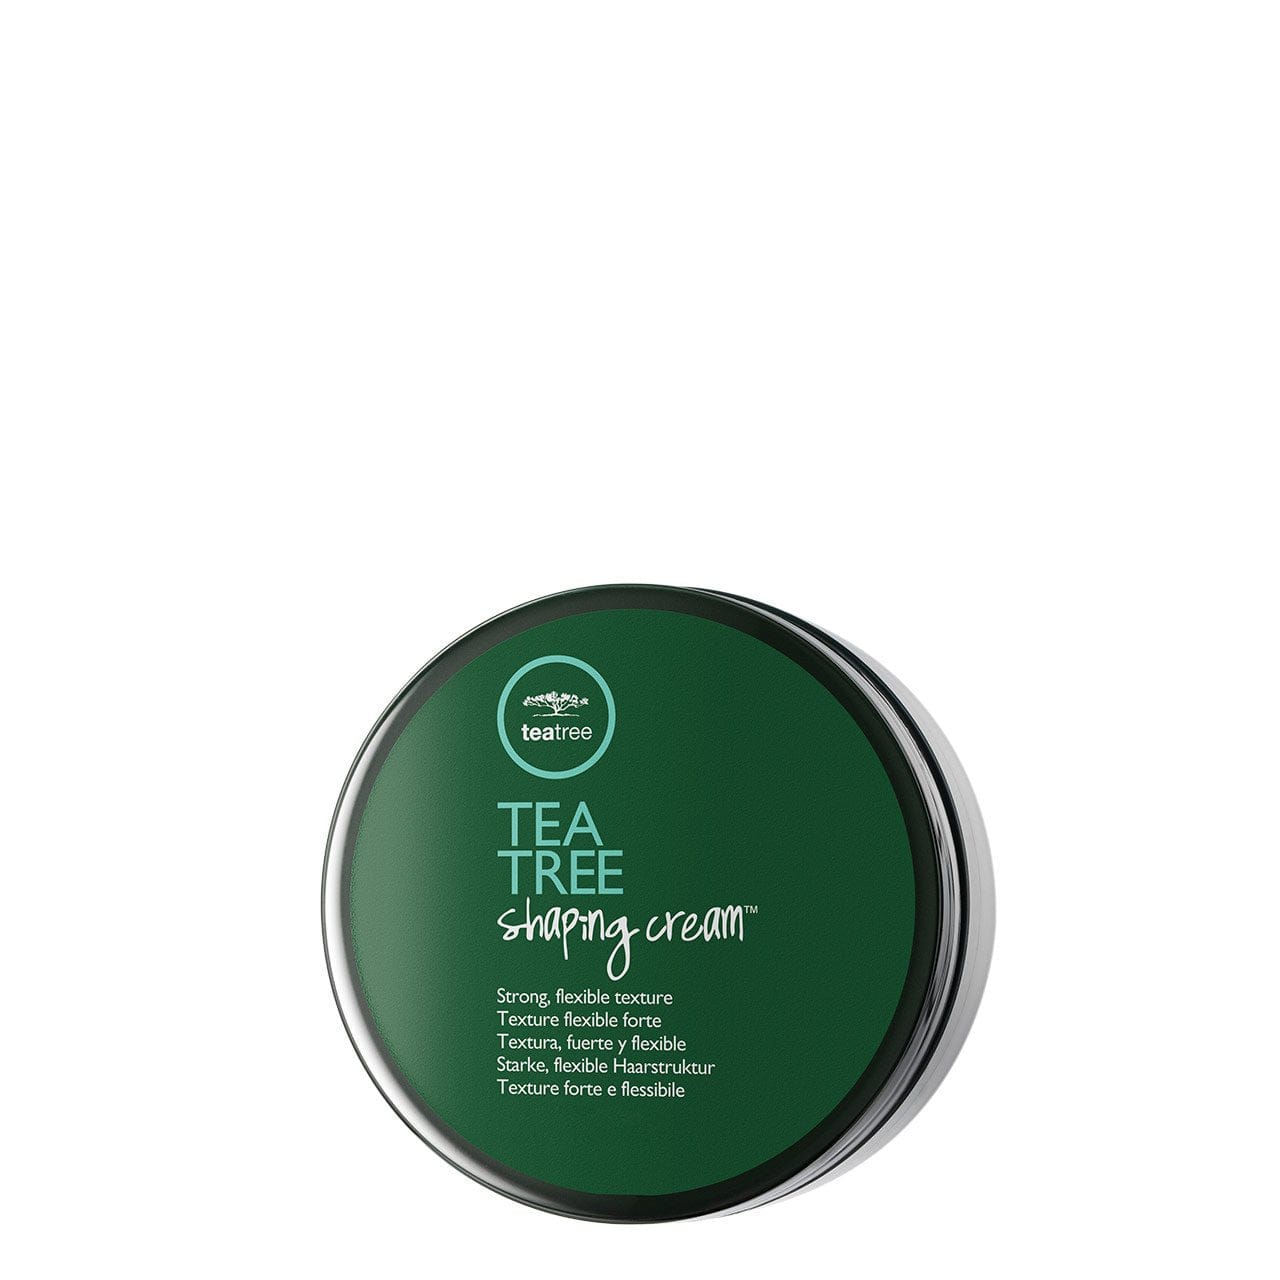 Tea Tree Shaping Cream 85g Hair - Paul Mitchell - Luxe Pacifique